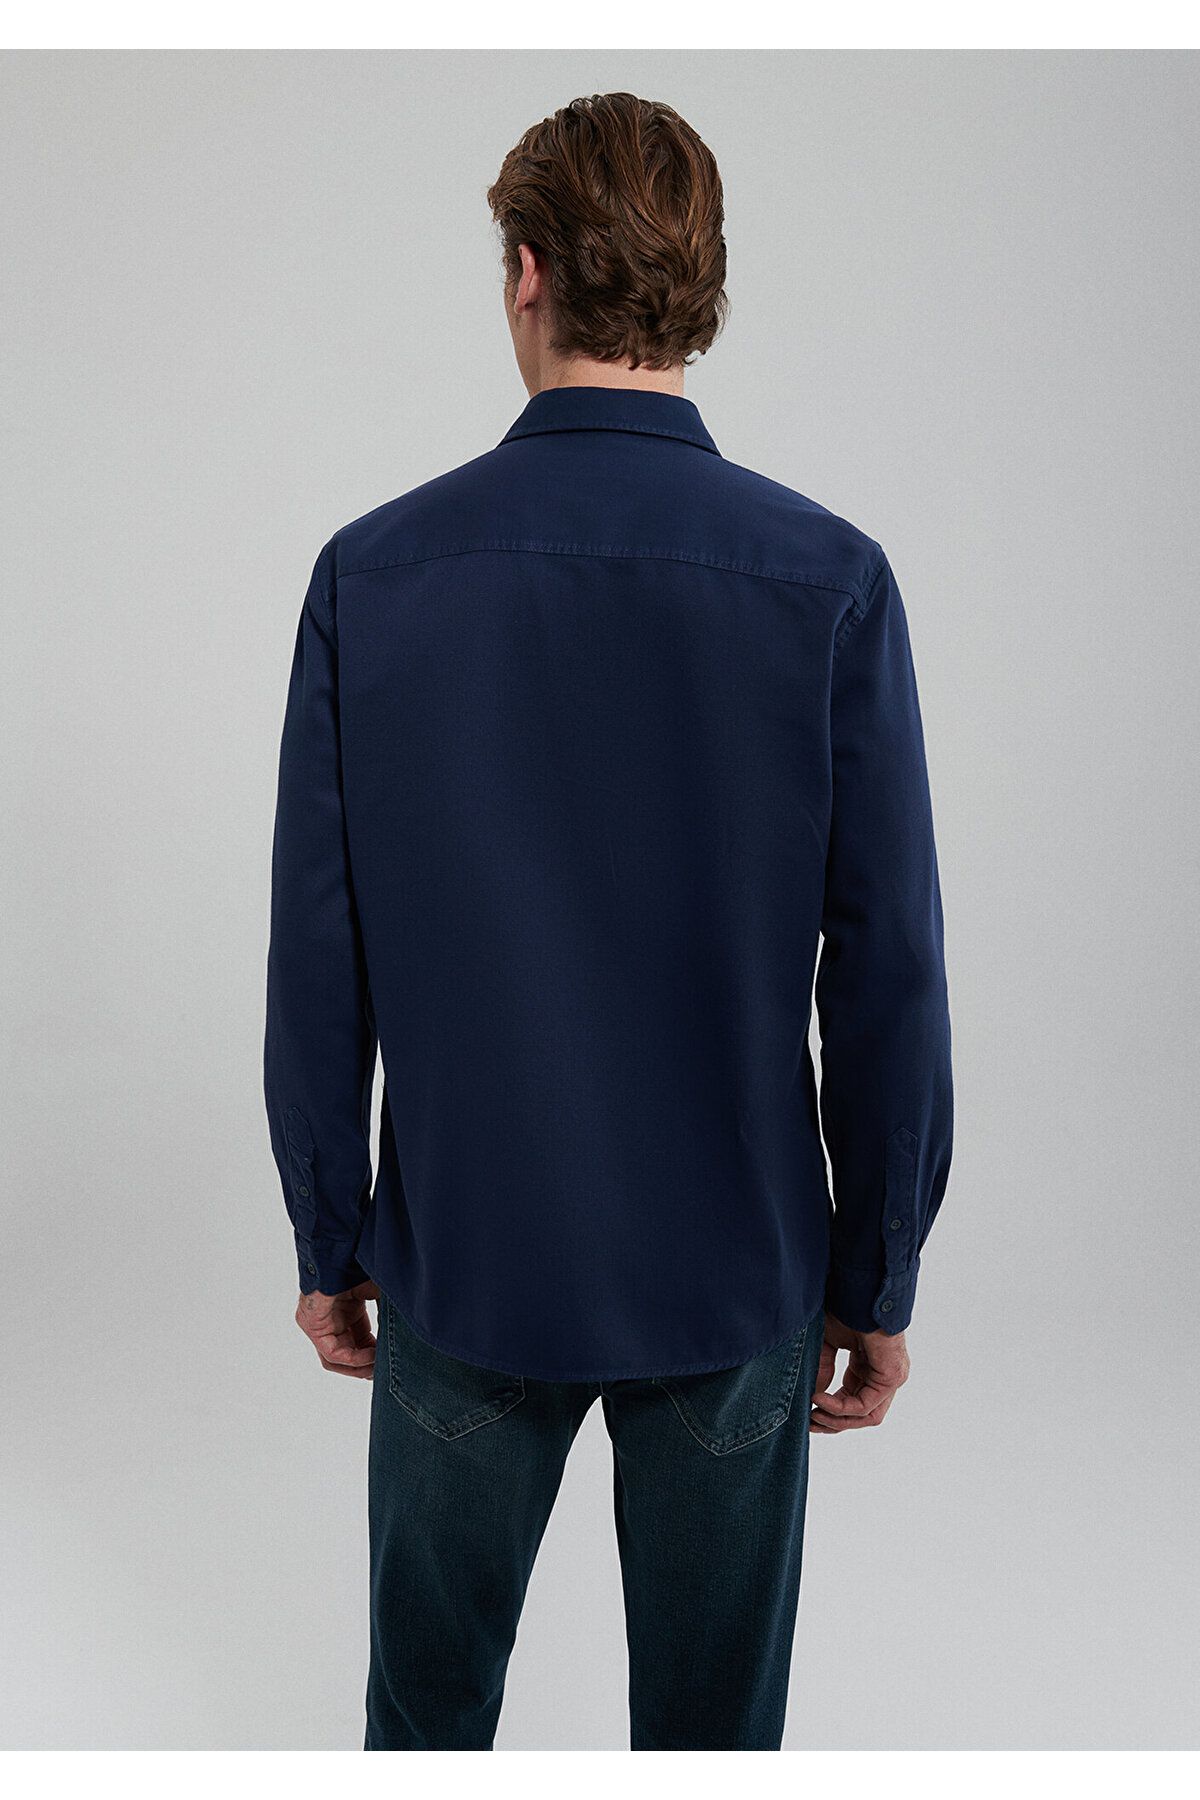 Mavi Lacivert Gömlek Slim Fit / Dar Kesim 0211292-81583 Fiyatı 